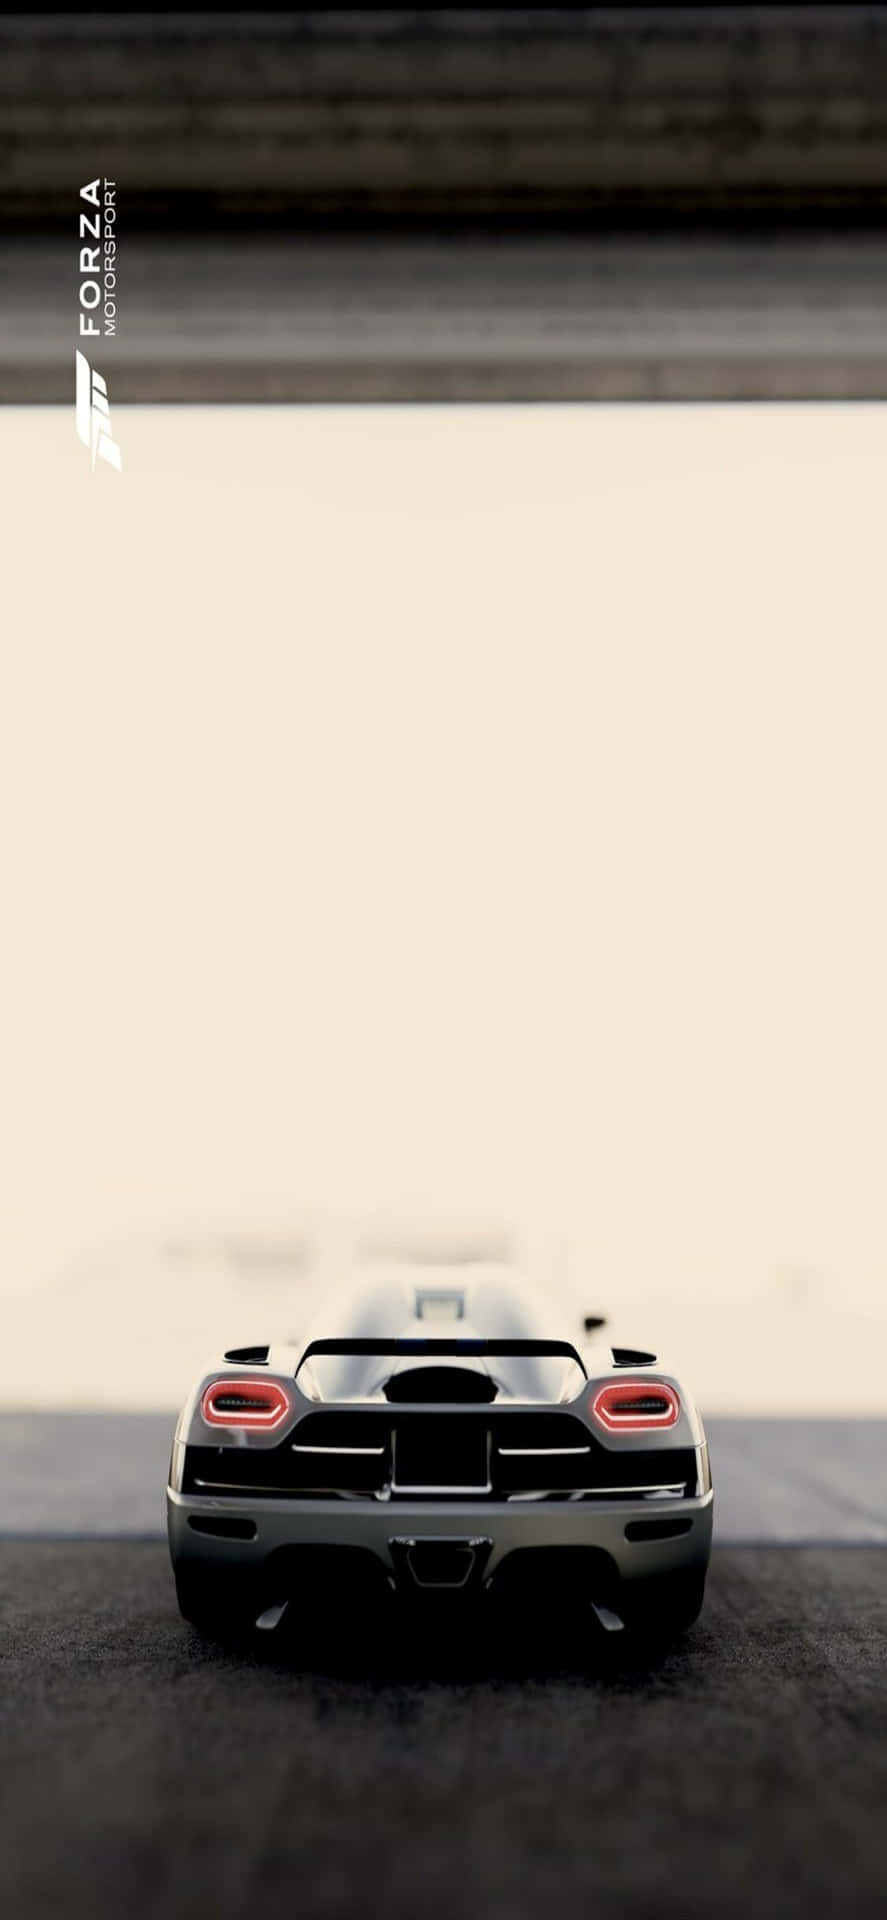 Fondode Pantalla De Koenigsegg One Para Iphone X En Forza Motorsport 7.